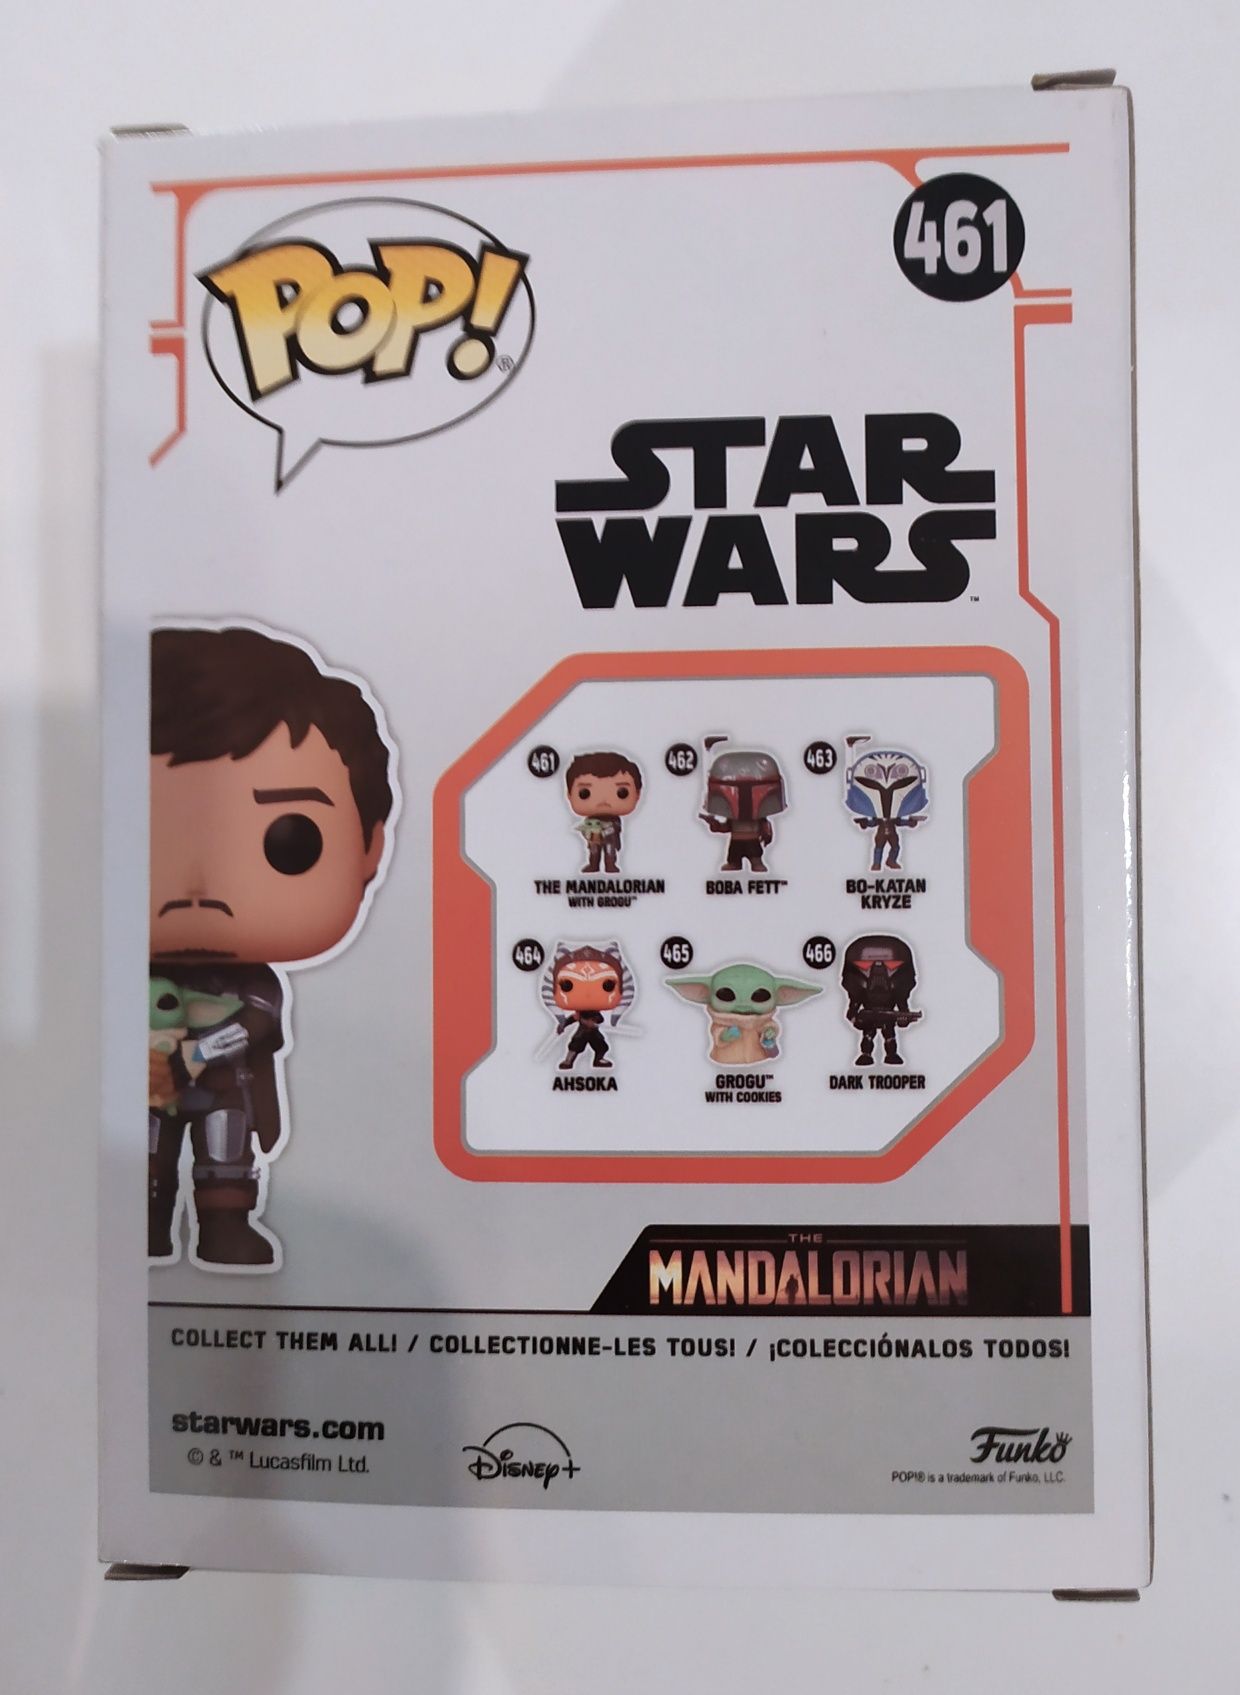 The Mandalorian with Grogu - figurka Funko Pop - Star Wars